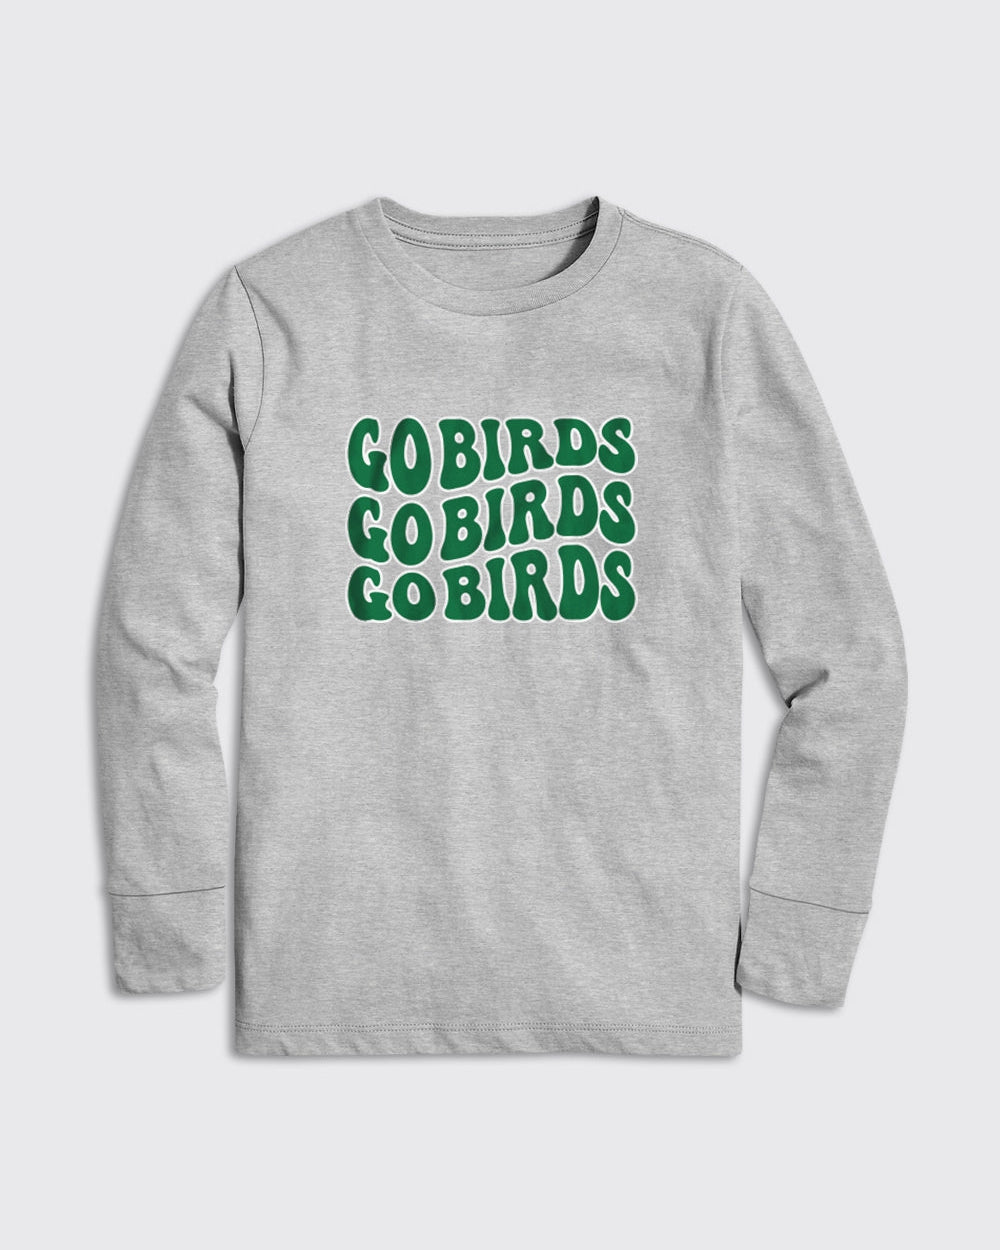 Kids Go Birds Long Sleeve - Eagles, Kids, Long Sleeve - Philly Sports Shirts